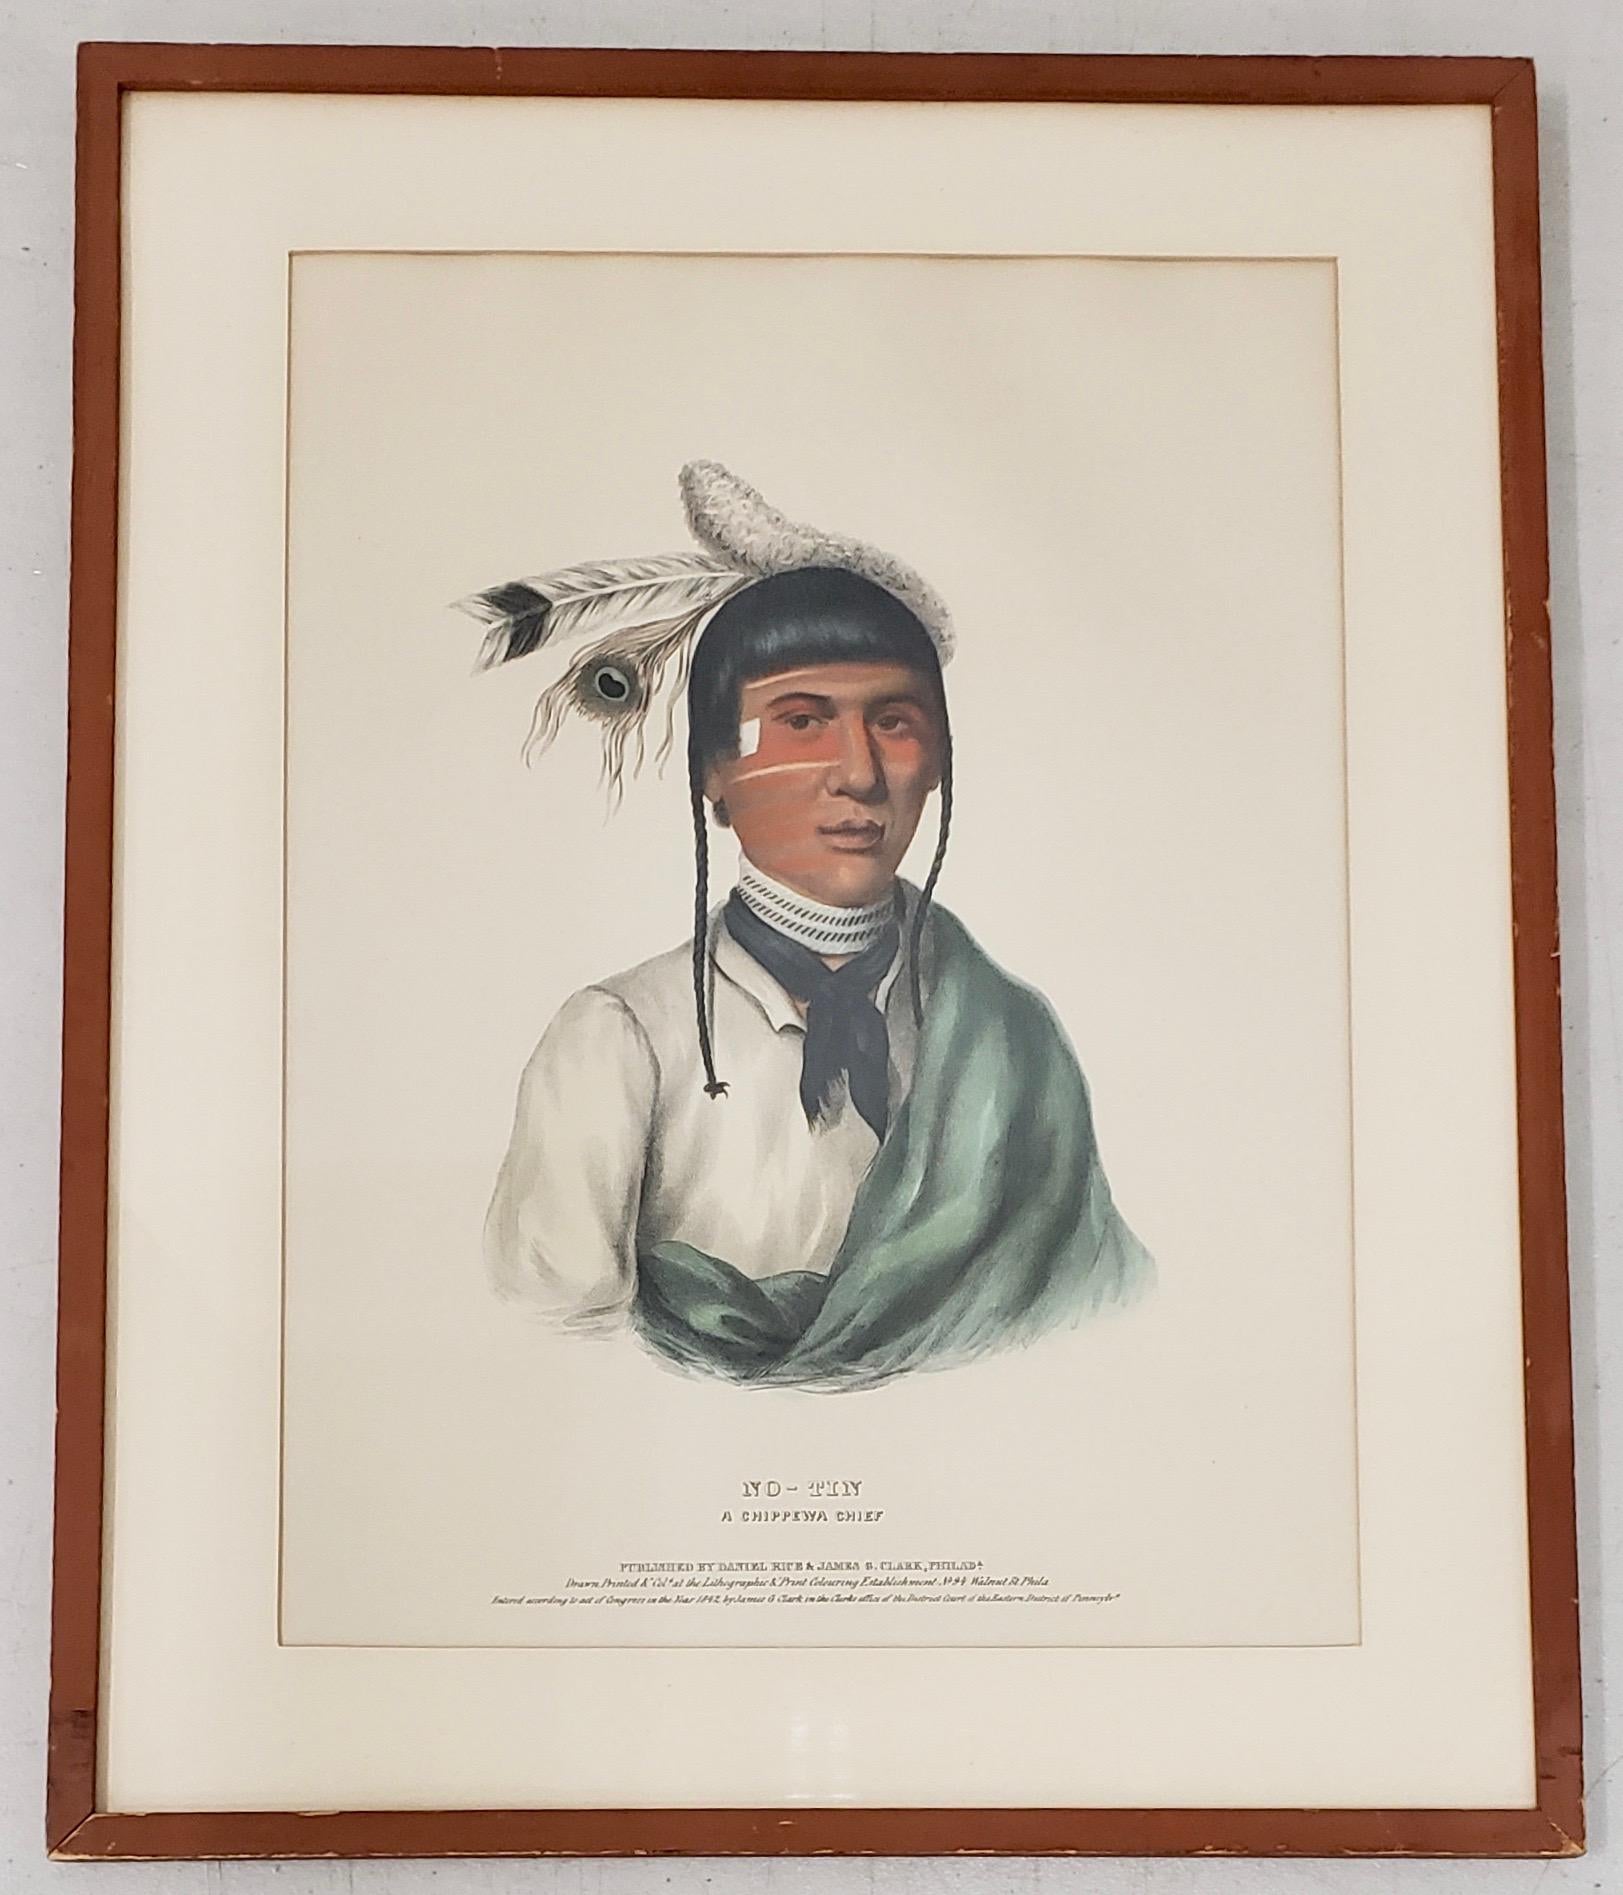 McKenney & Hall Print - No-Tin, A Chippewa Chief